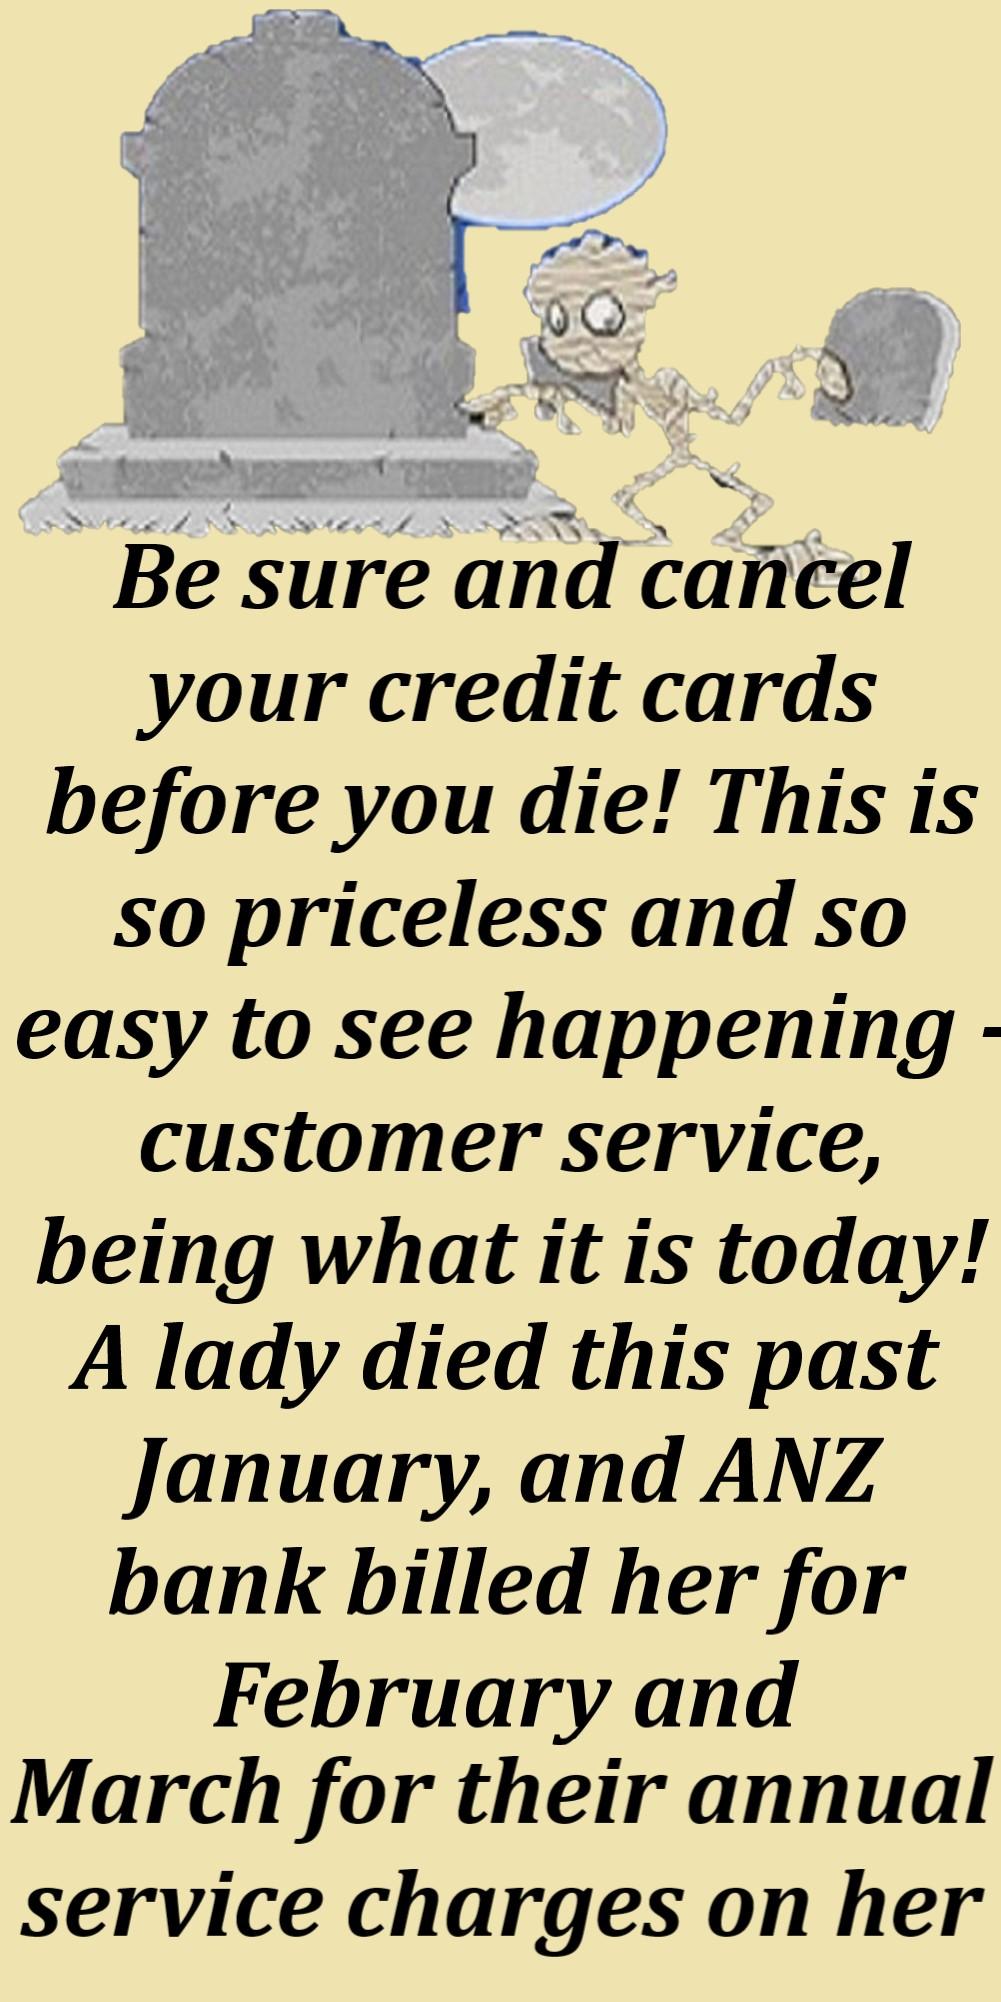 Cancel Credit Cards Prior To Death - Clean Joke